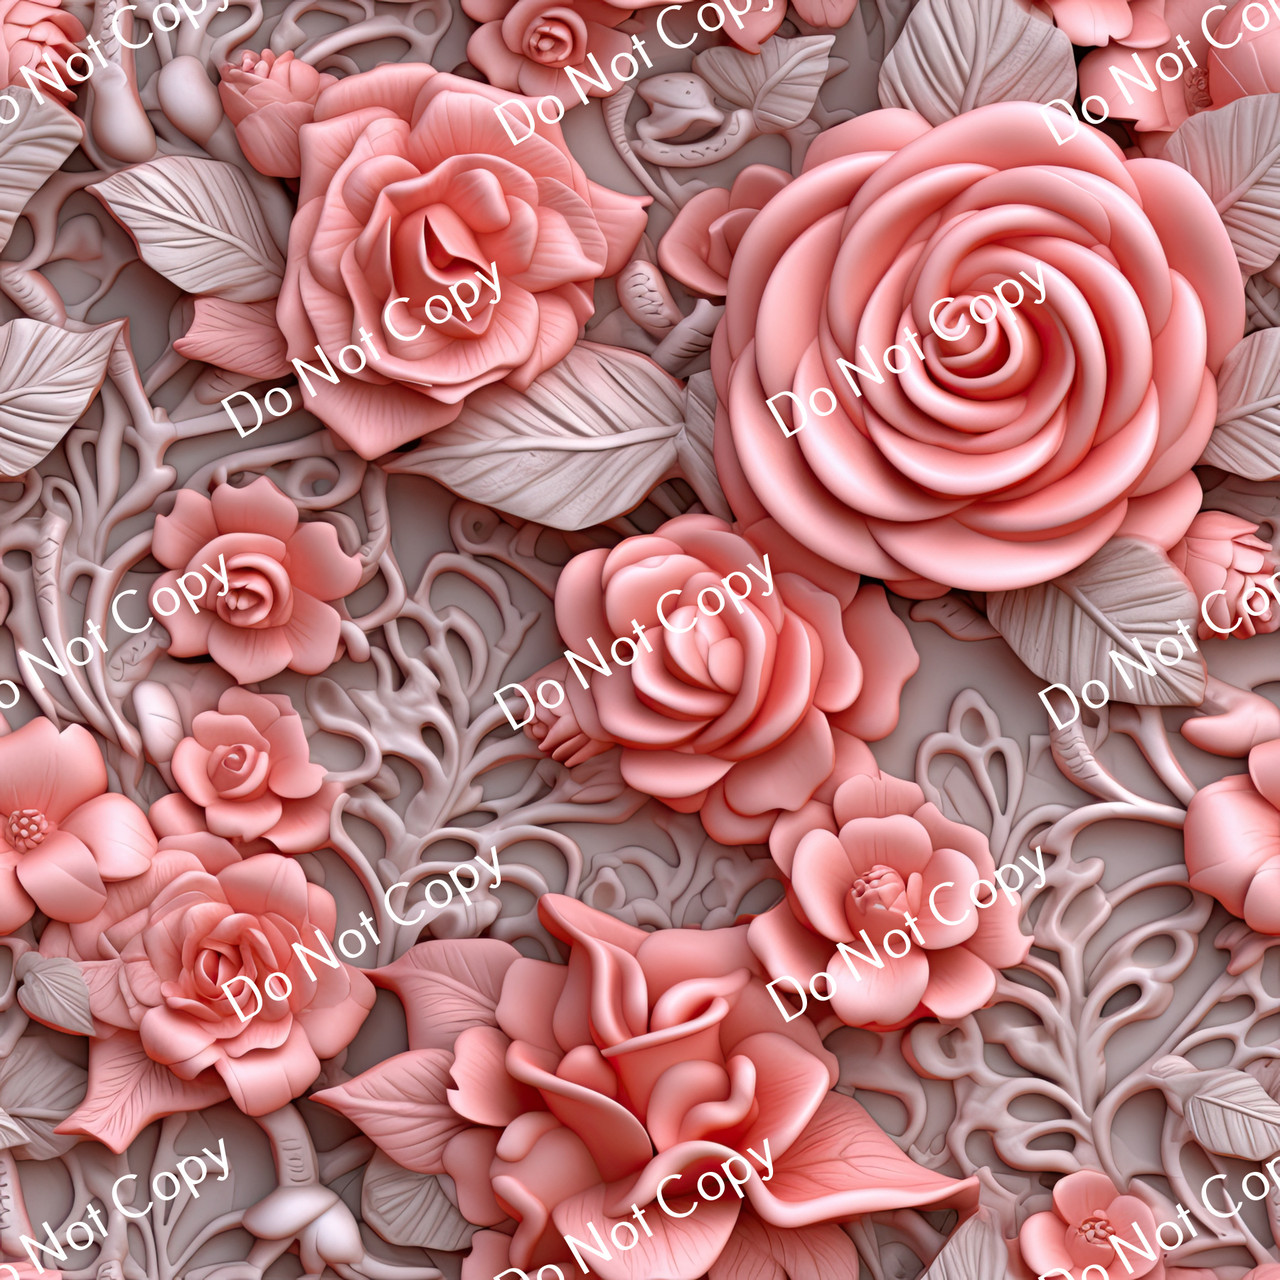 Printed Pattern - Roses Flower pattern - Heat Transfer Vinyl